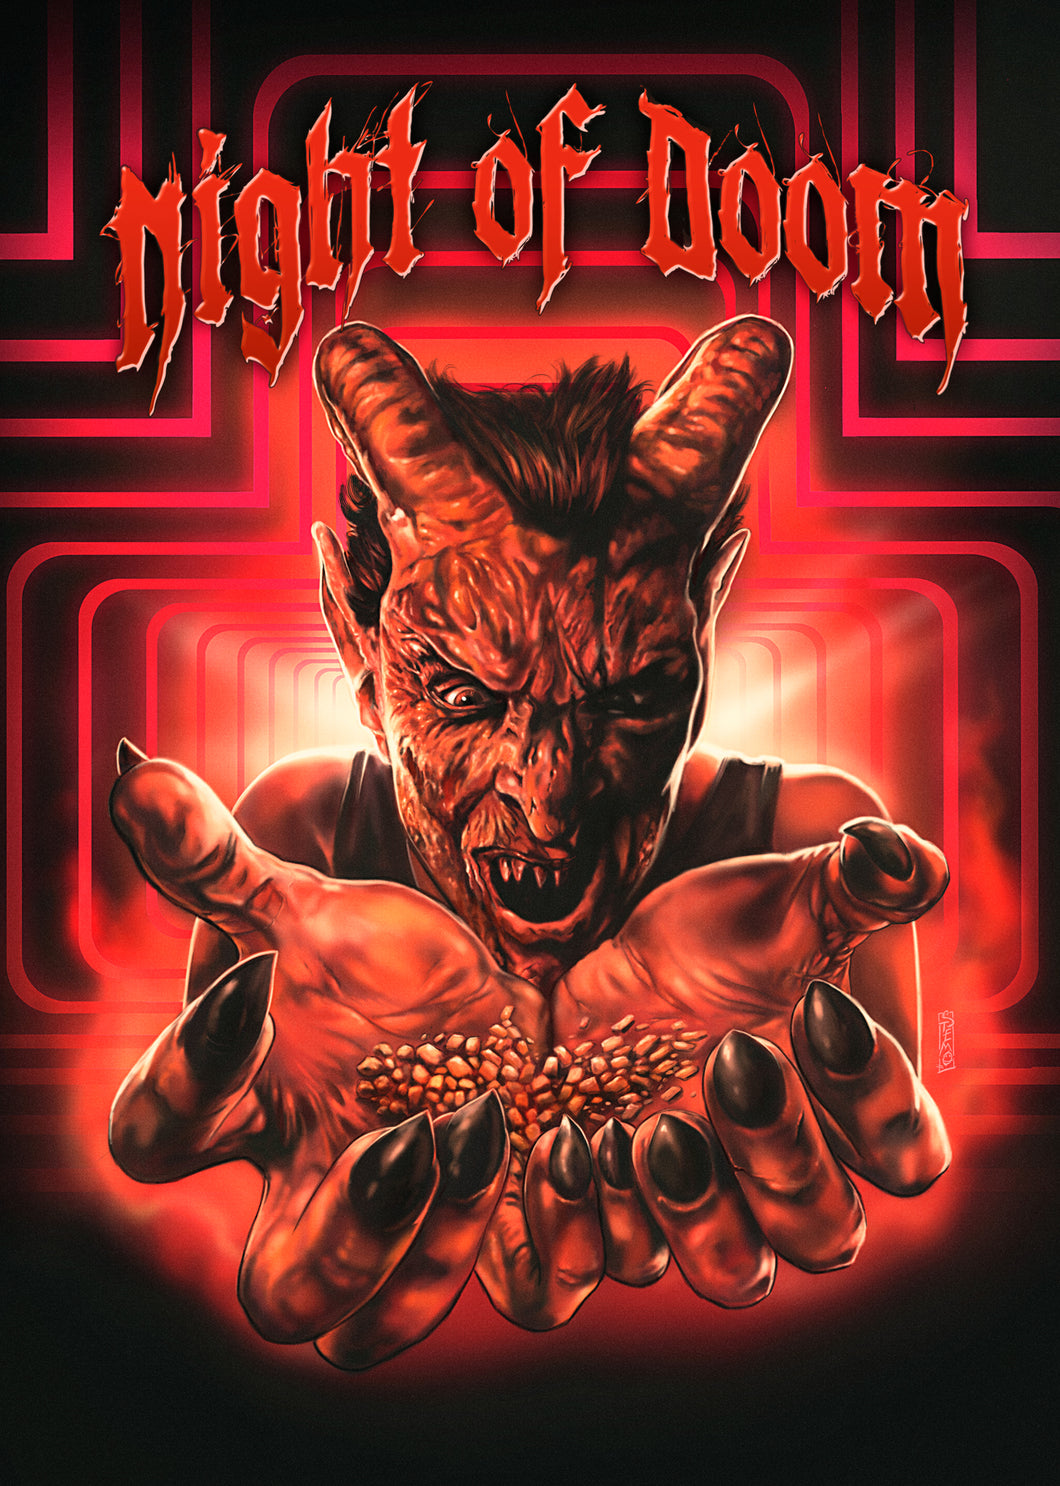 Night of Doom Nightmare Fuel DVD